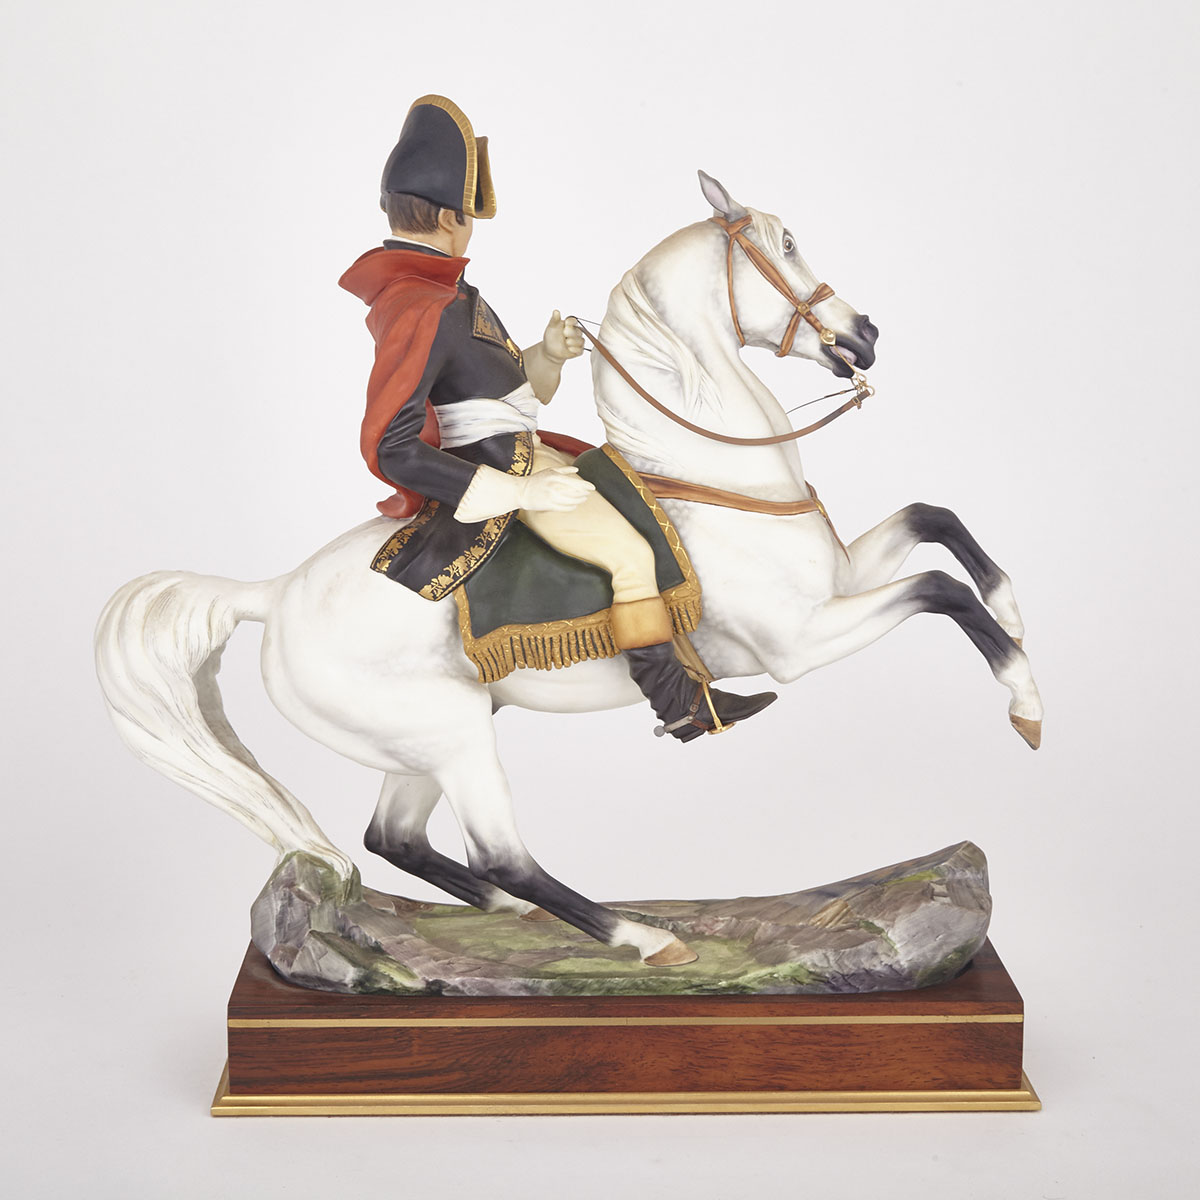 Royal Worcester Equestrian Figure, ‘Napoleon Bonaparte’, Bernard Winskill, 202/750, 1969